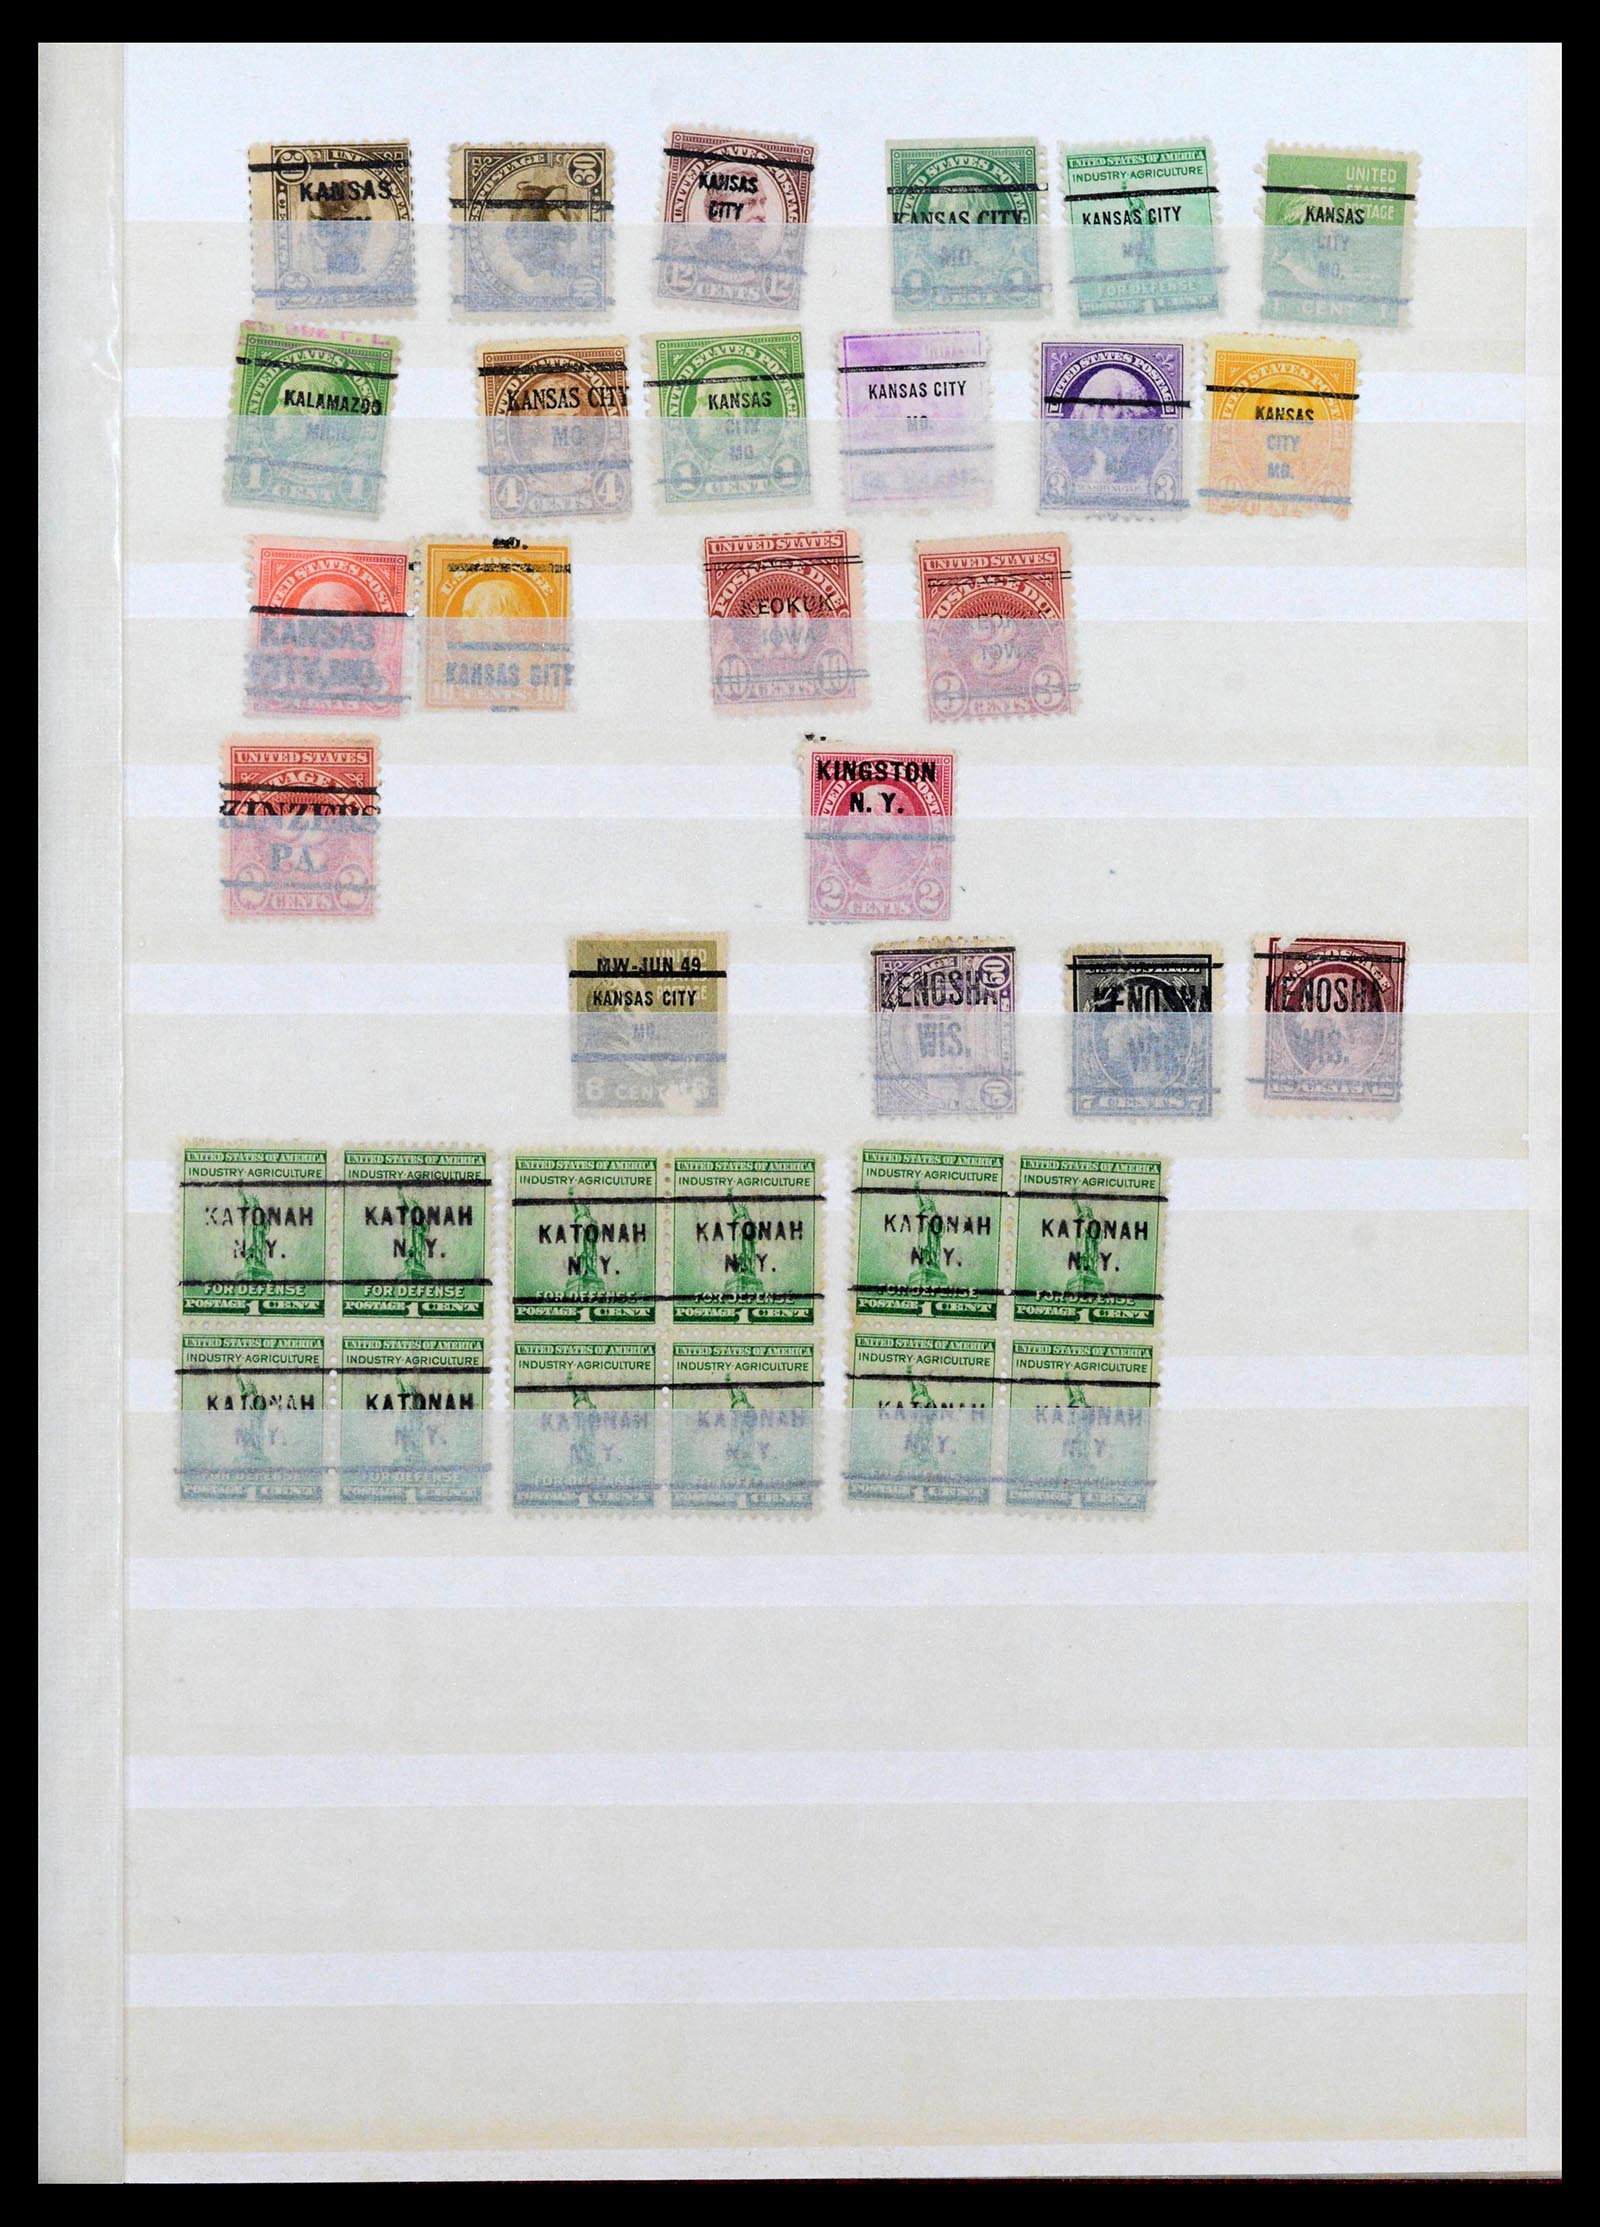 39366 0013 - Stamp collection 39366 USA precancels 1892-1940.